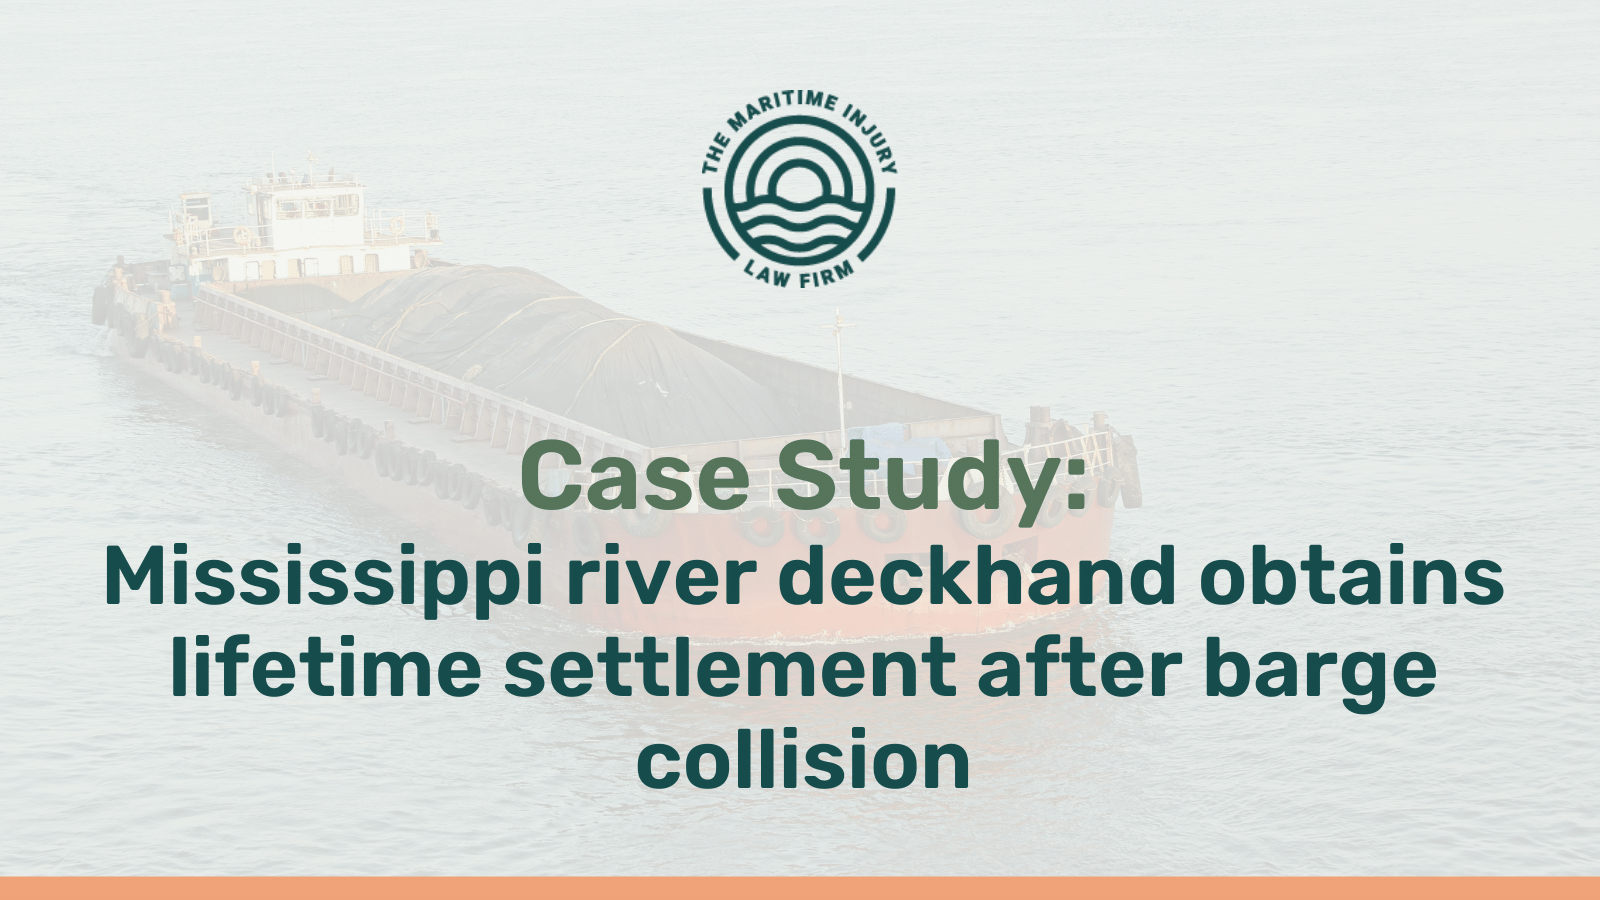 Mississippi river deckhand obtains lifetime settlement after barge collision - maritime injury law firm - George Vourvoulias